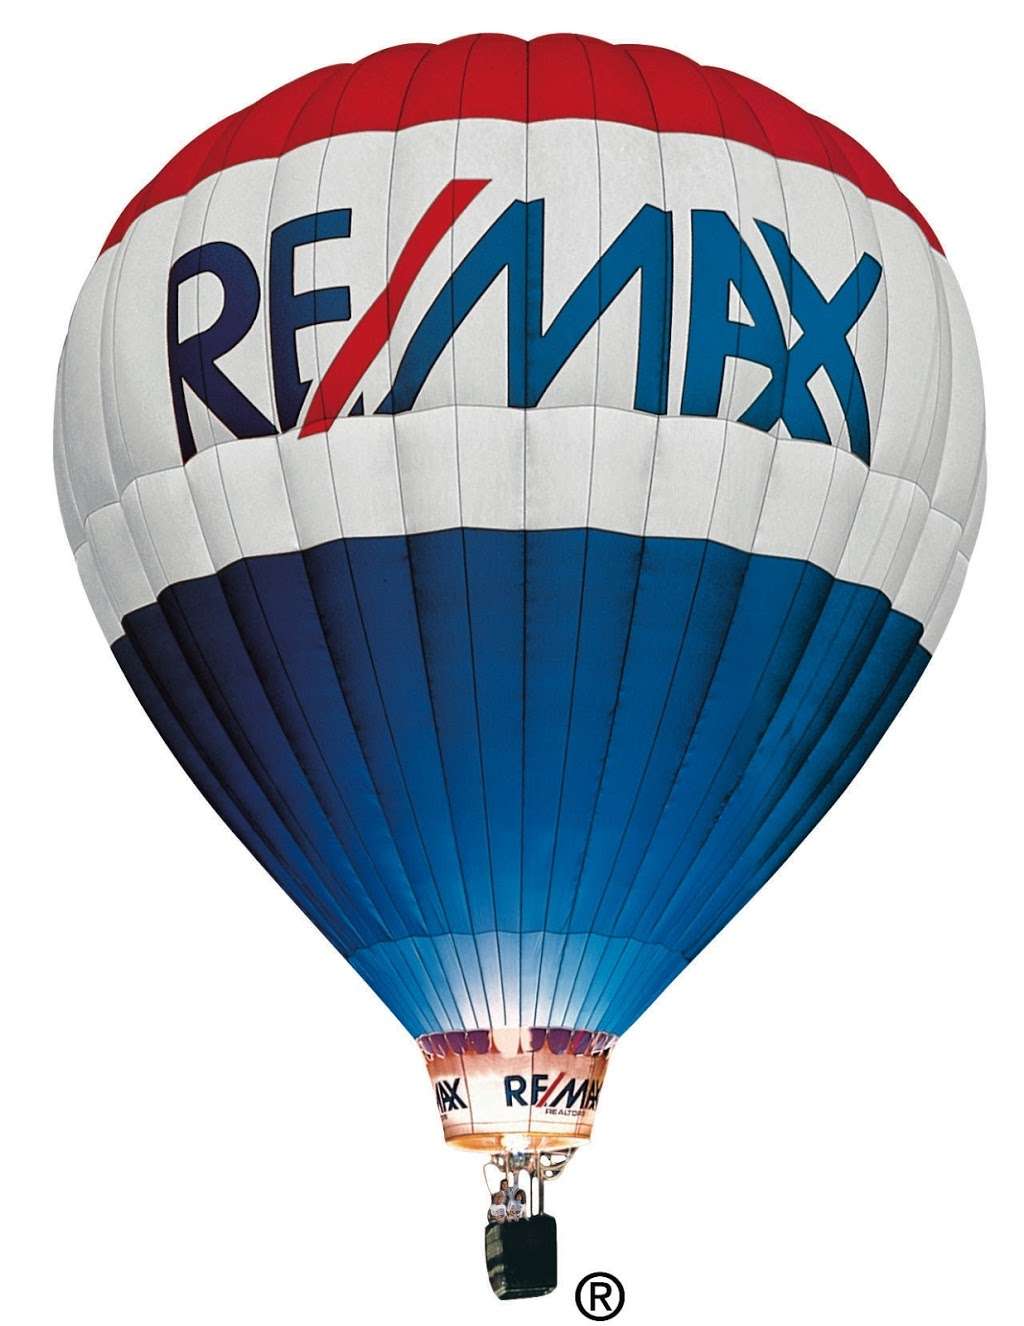 REMAX Lifetime Realtors | 605 Chestnut St, Union, NJ 07083, USA | Phone: (908) 688-2828